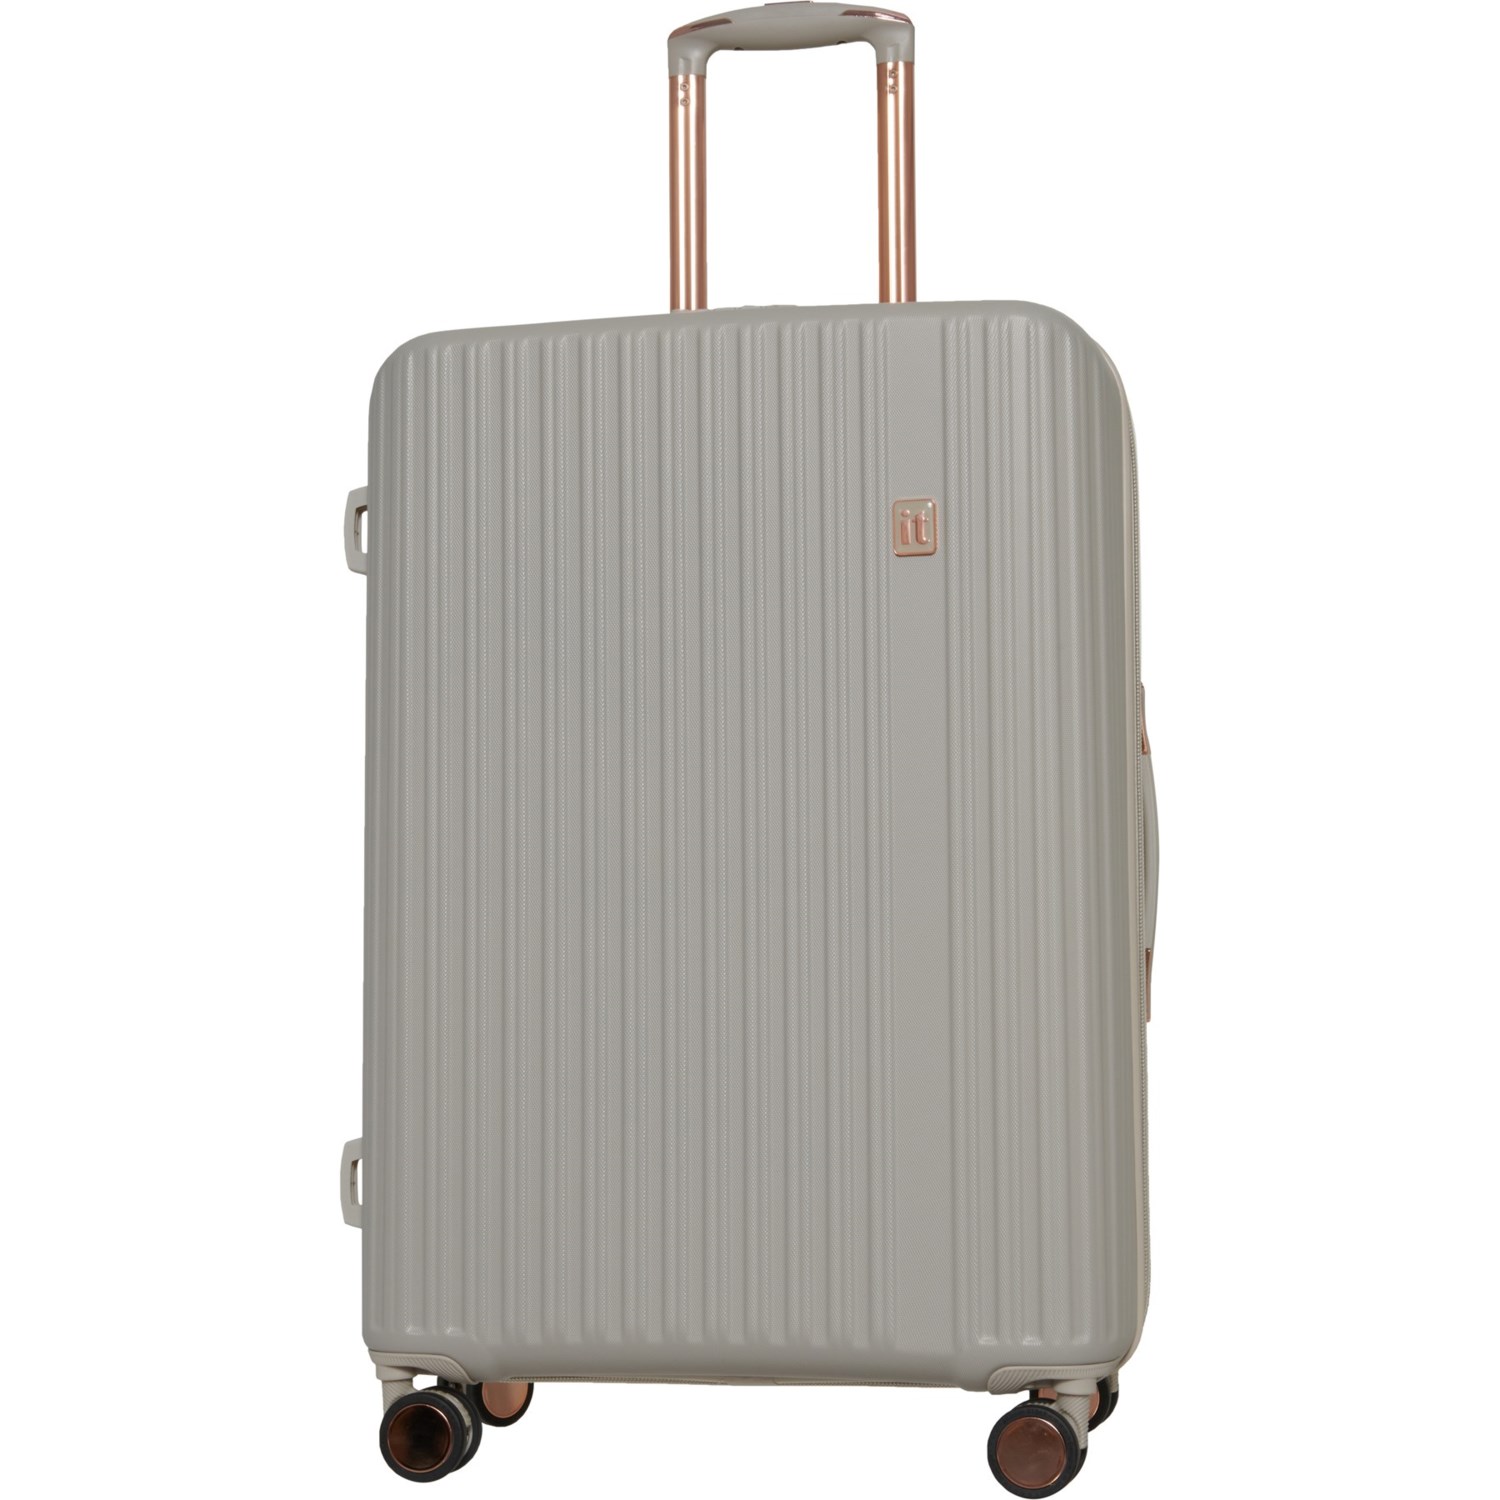 IT Luggage 27.4” Precursor Spinner Suitcase - Hardside, Expandable, Pumice Stone